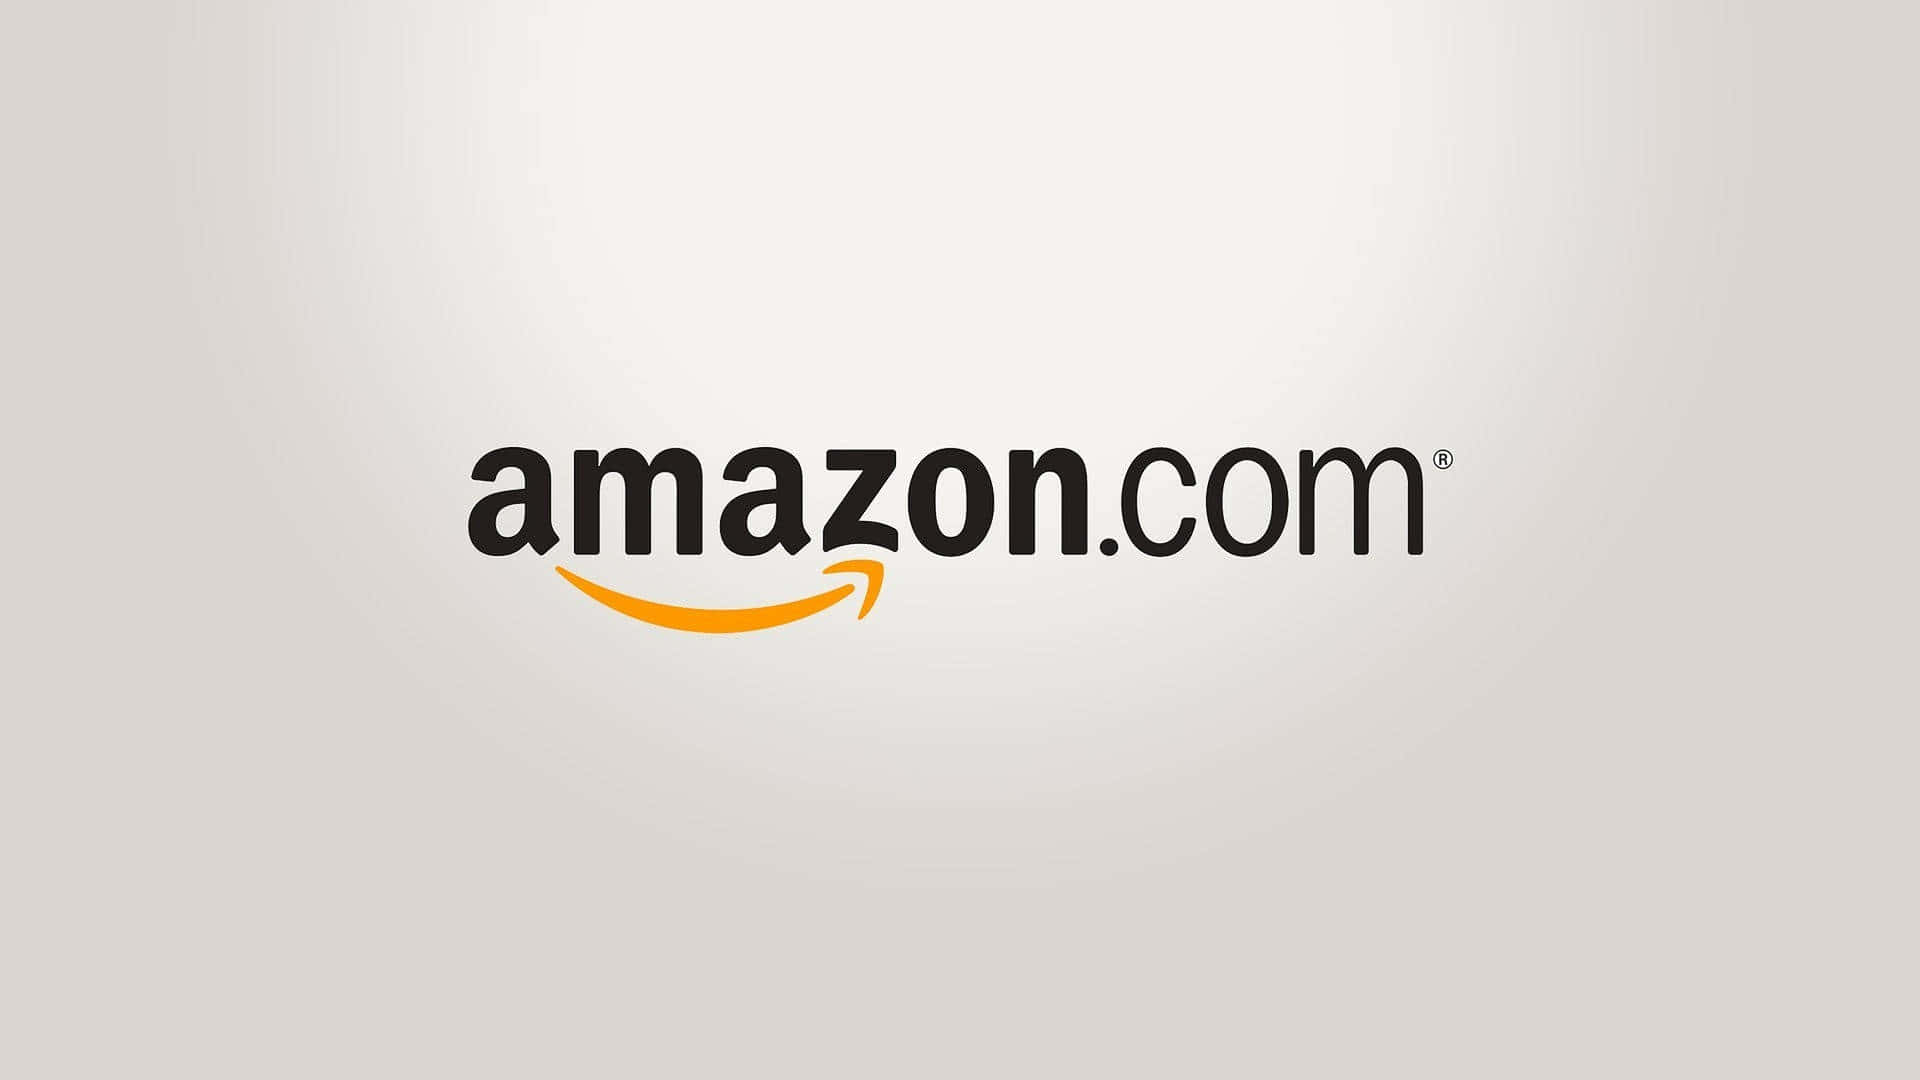 Free Amazon Wallpaper Downloads, Amazon Wallpaper for FREE